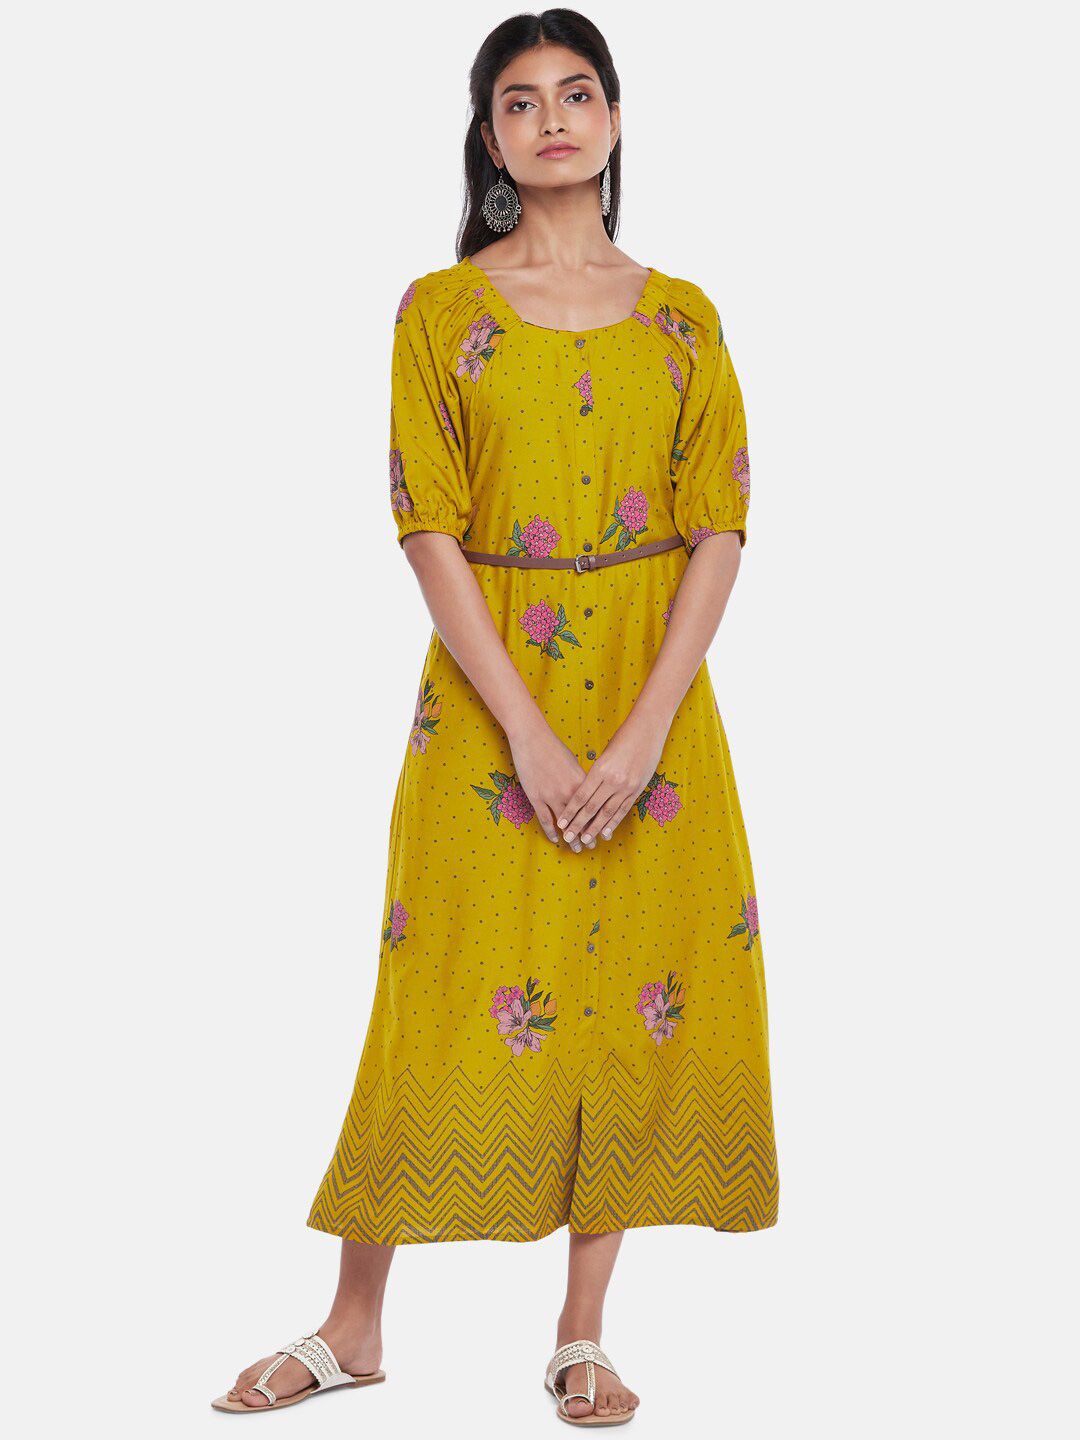 AKKRITI BY PANTALOONS Mustard Yellow Floral Midi Dress Price in India